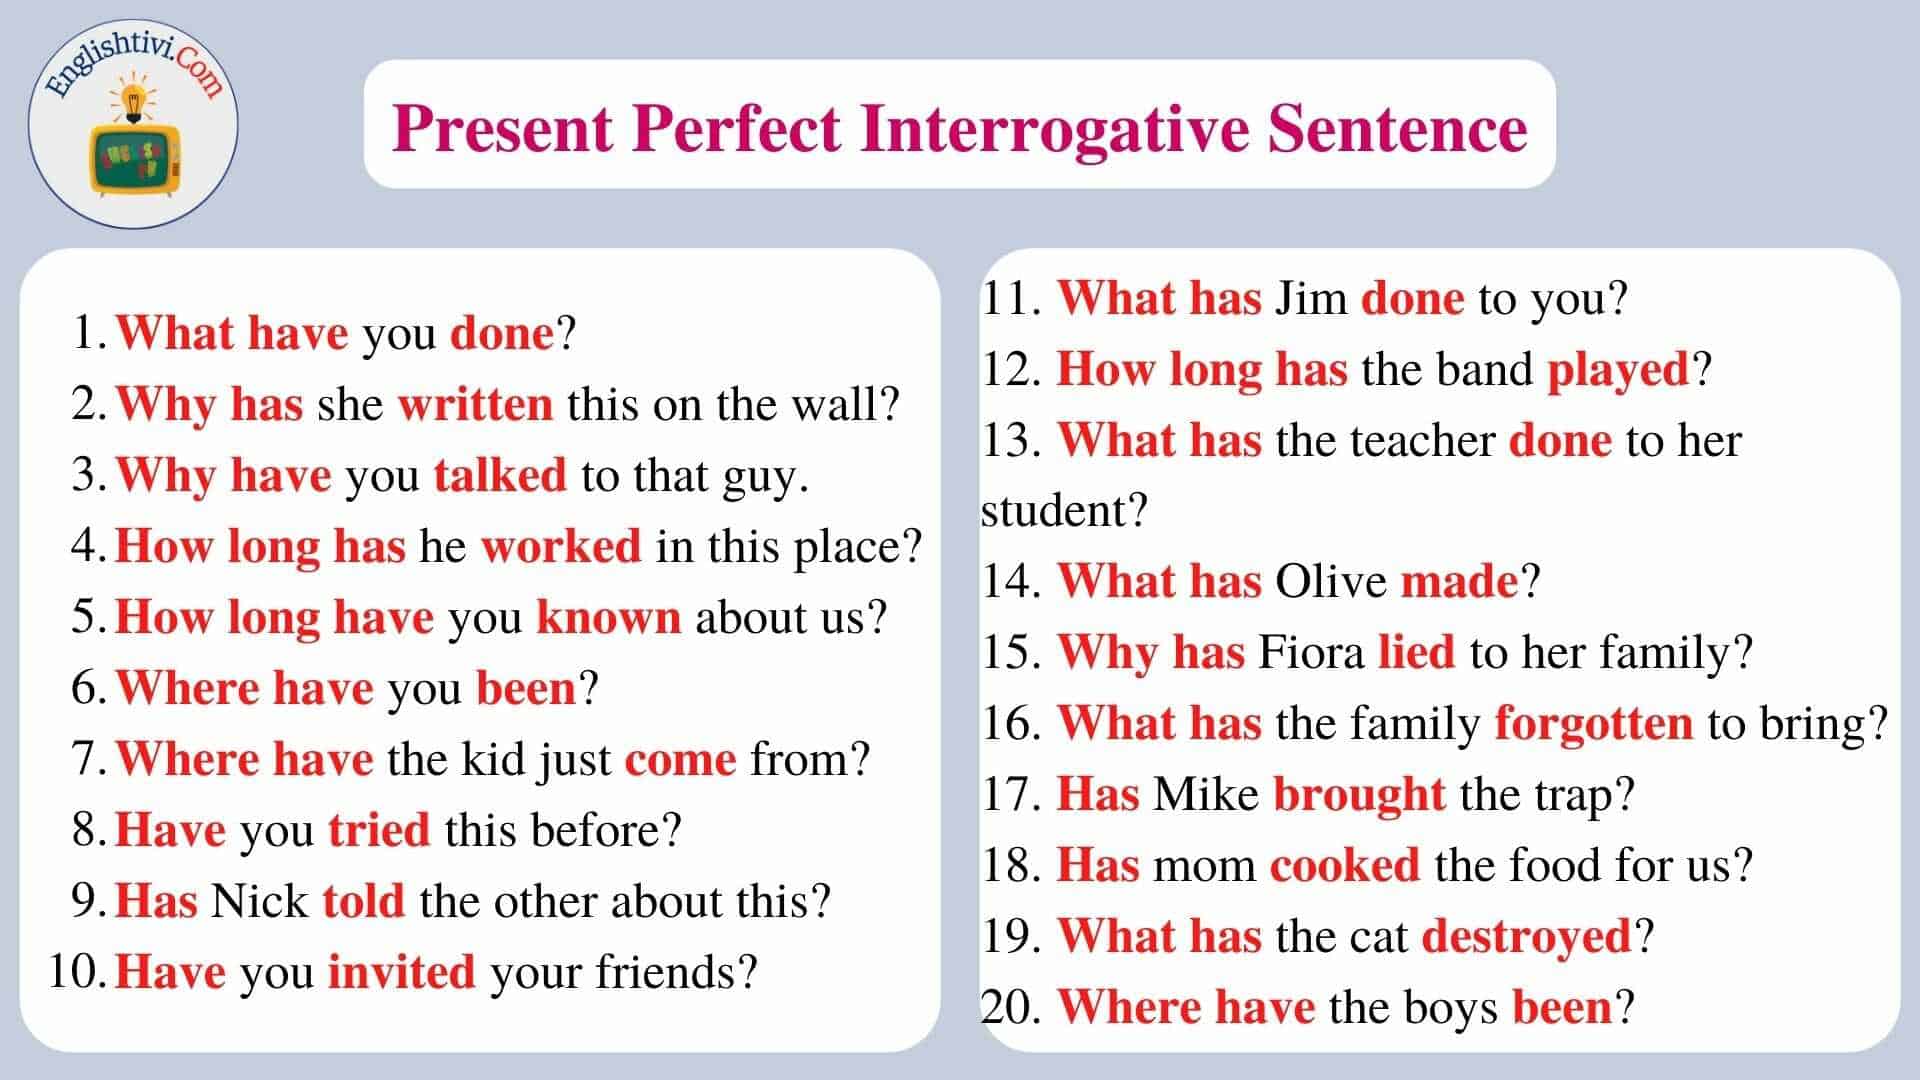 Present_Perfect_Interrogative_Sentence